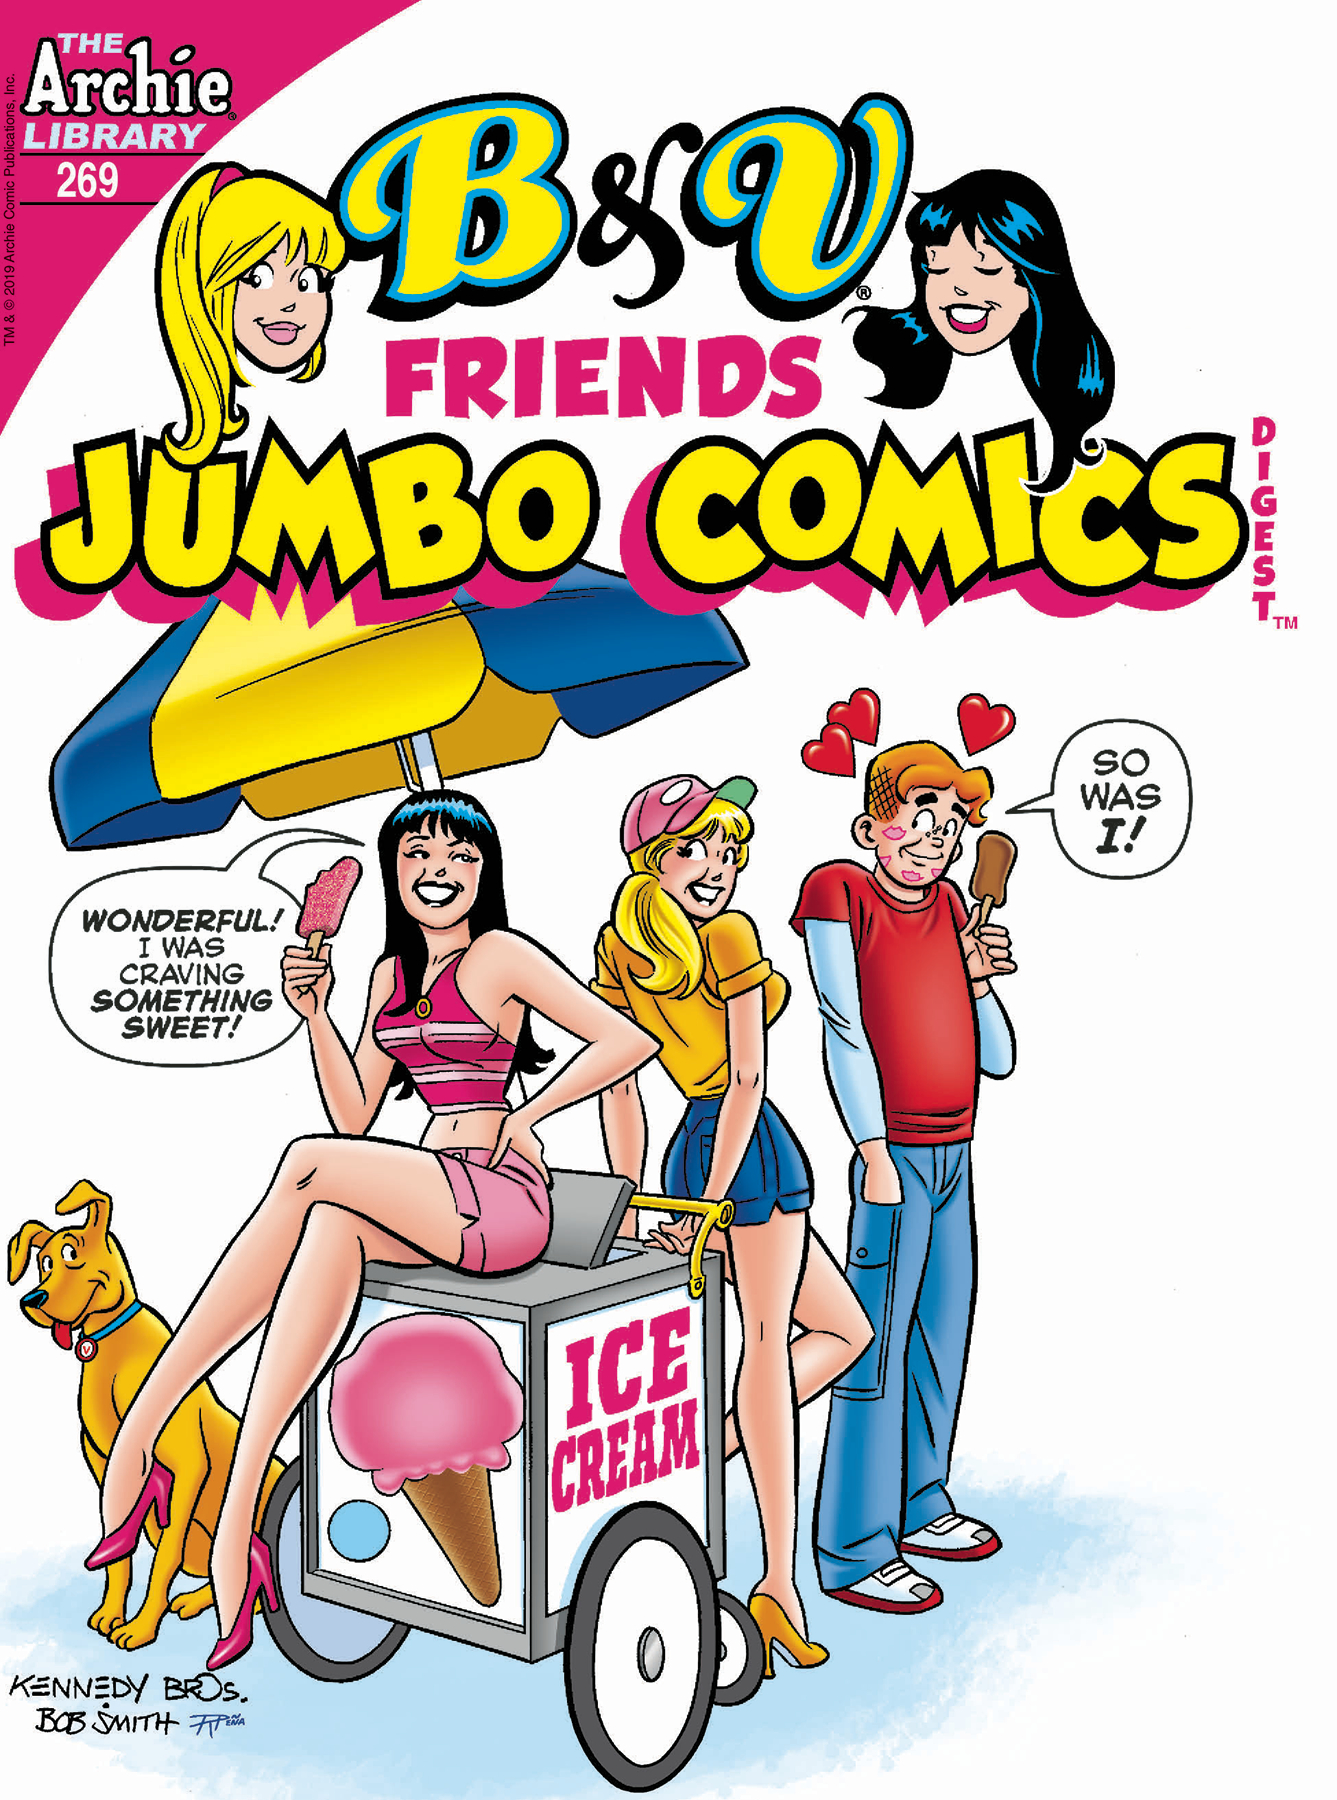 B & V FRIENDS JUMBO COMICS DIGEST #269